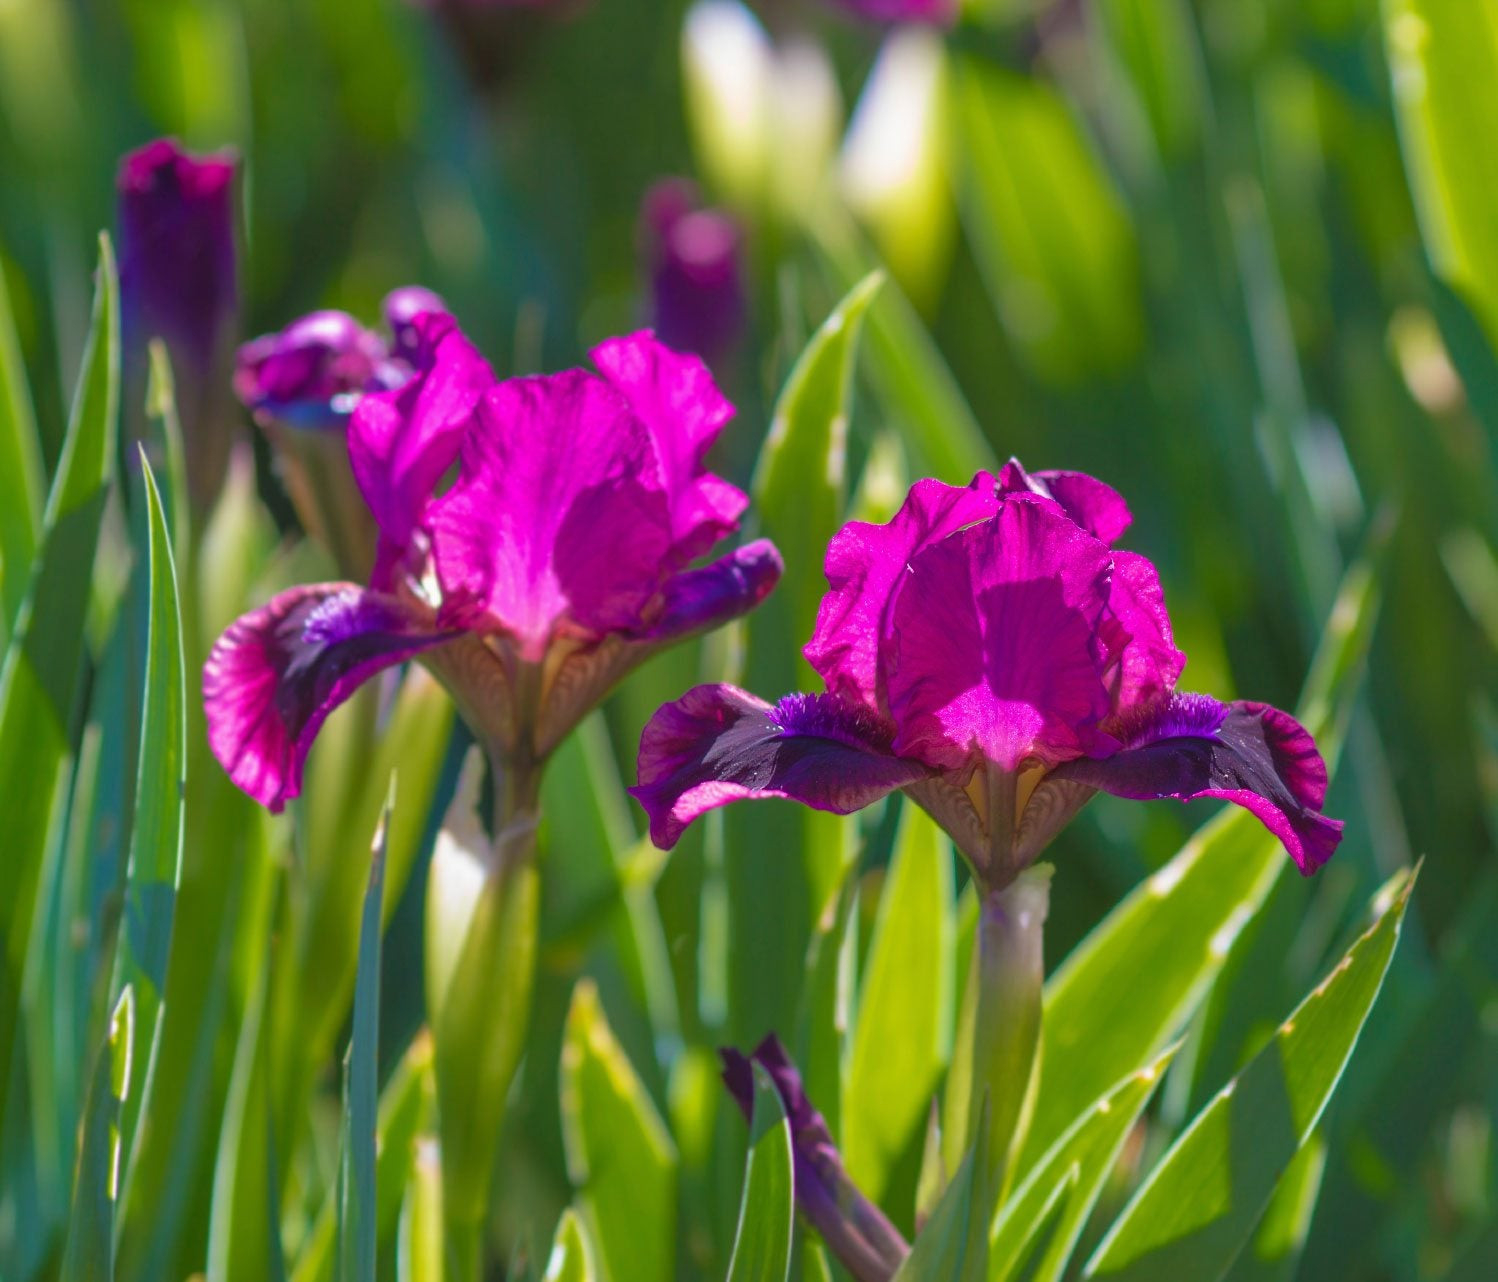 Iris Plants - Tips For Growing Iris